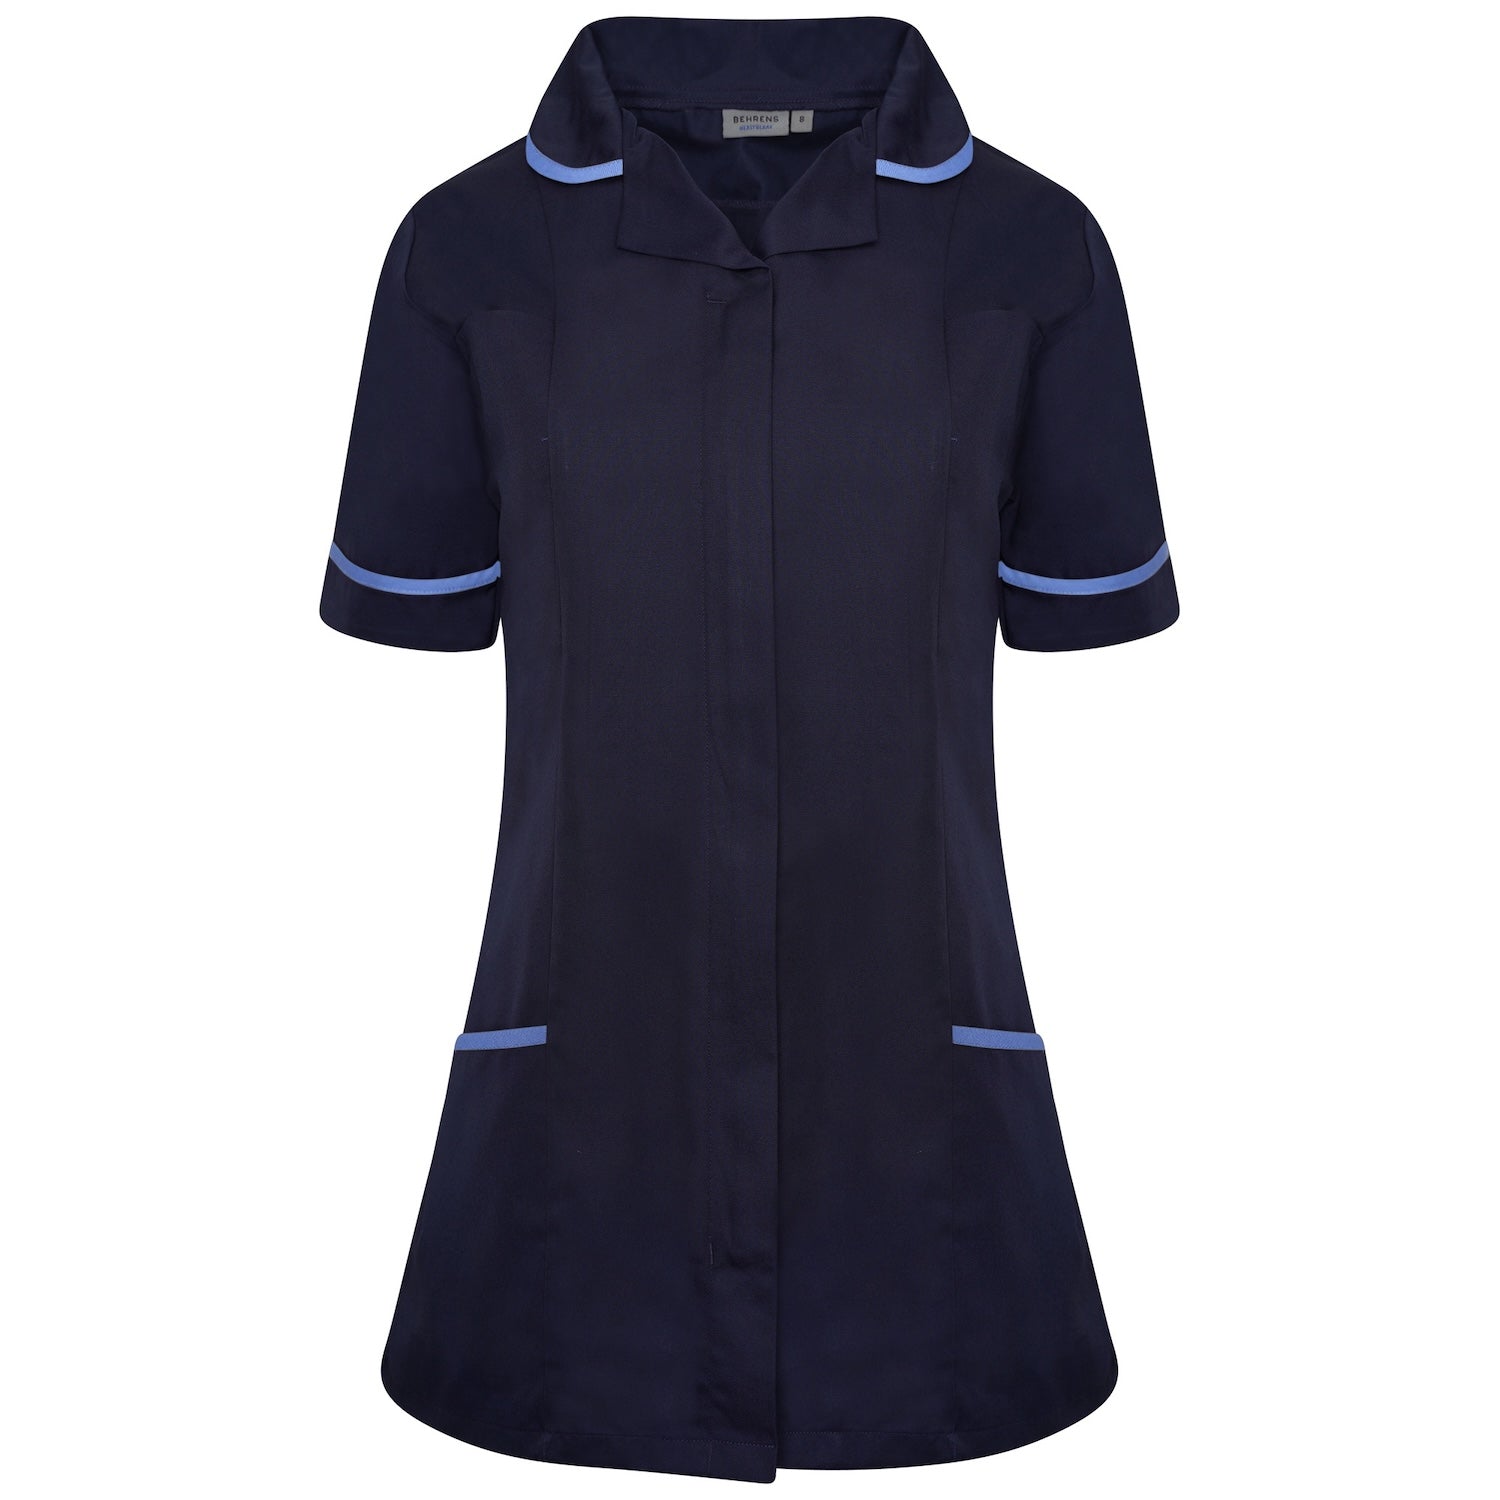 Ladies Healthcare Tunic | Round Collar | Navy/Hospital Blue Trim